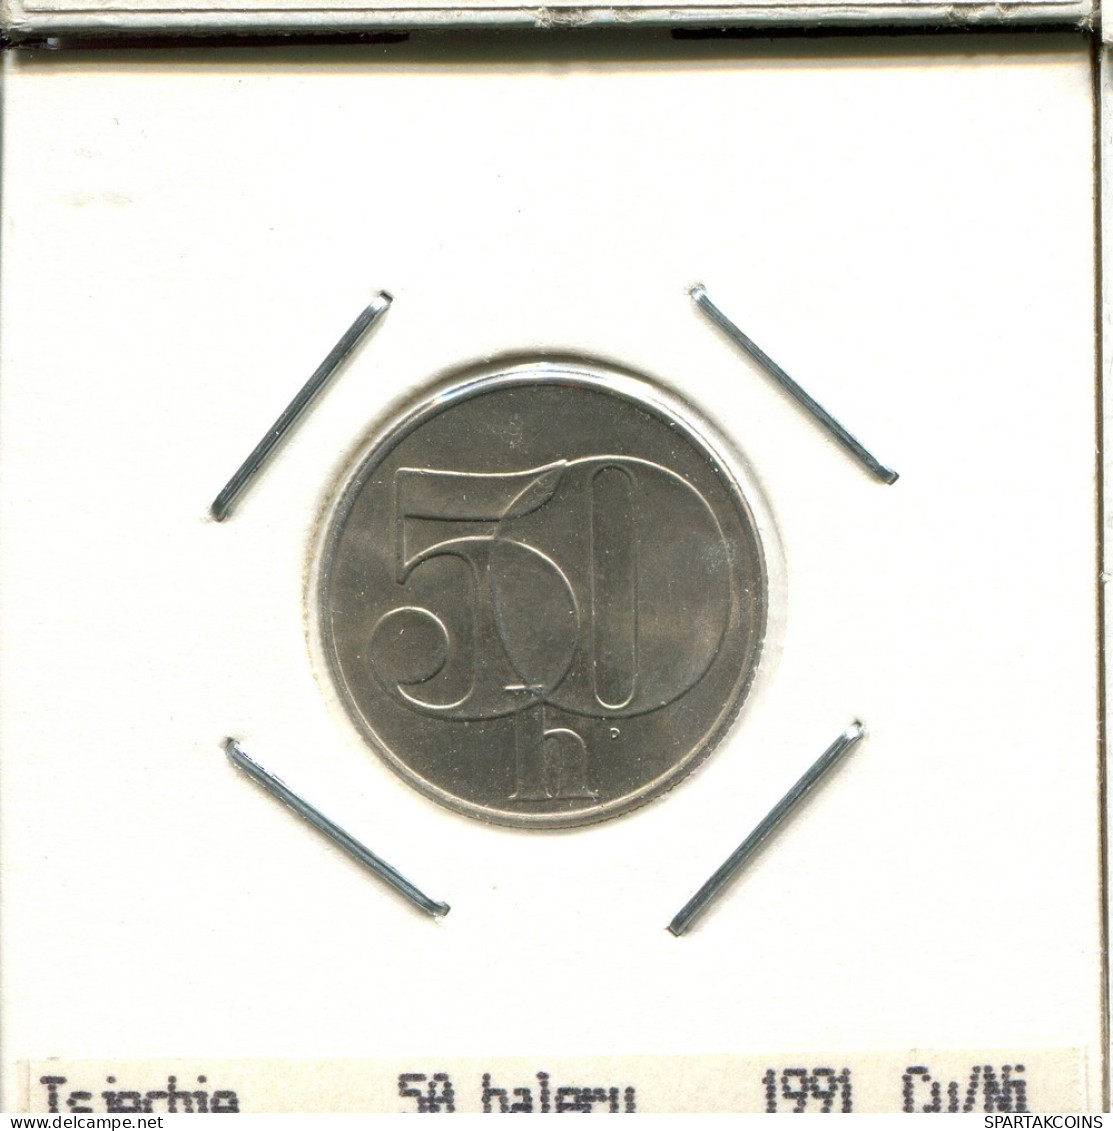 50 HALERU 1991 TSCHECHOSLOWAKEI CZECHOSLOWAKEI SLOVAKIA Münze #AS537.D.A - Tschechoslowakei